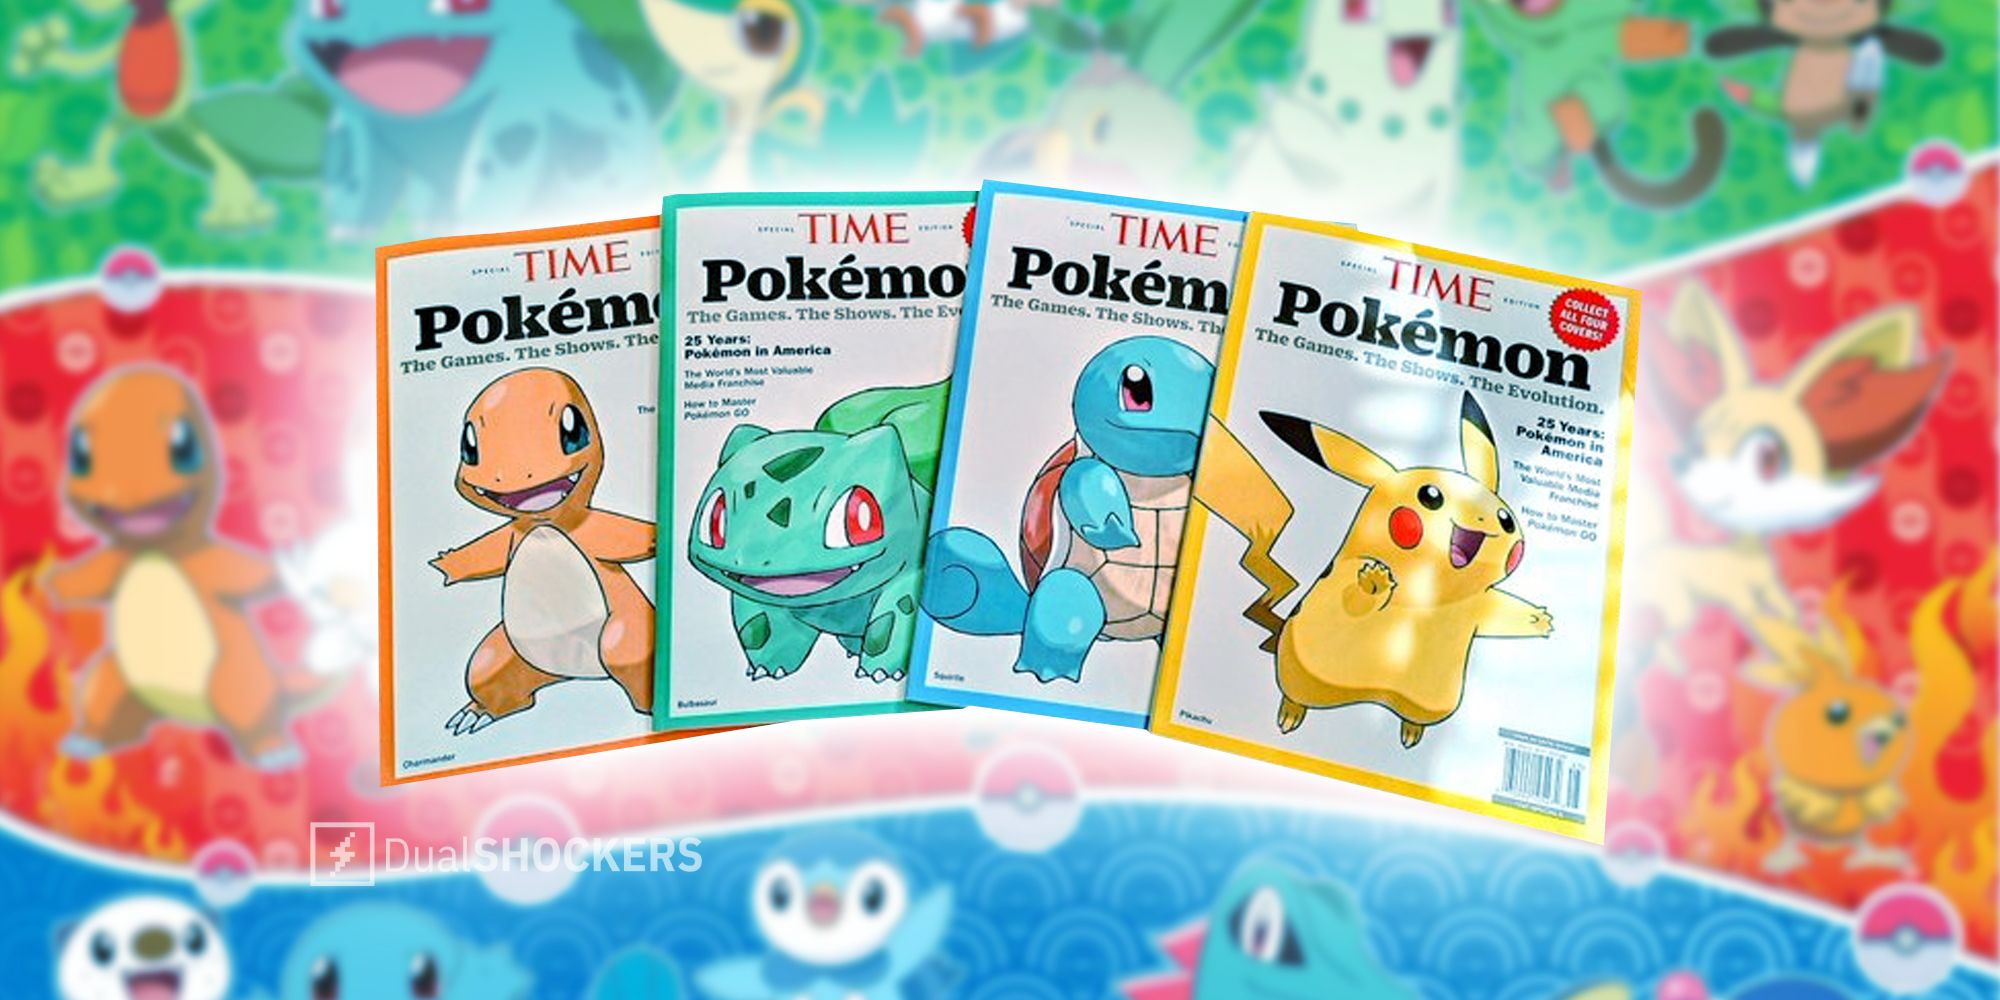 Pokemon Time Magazine covers